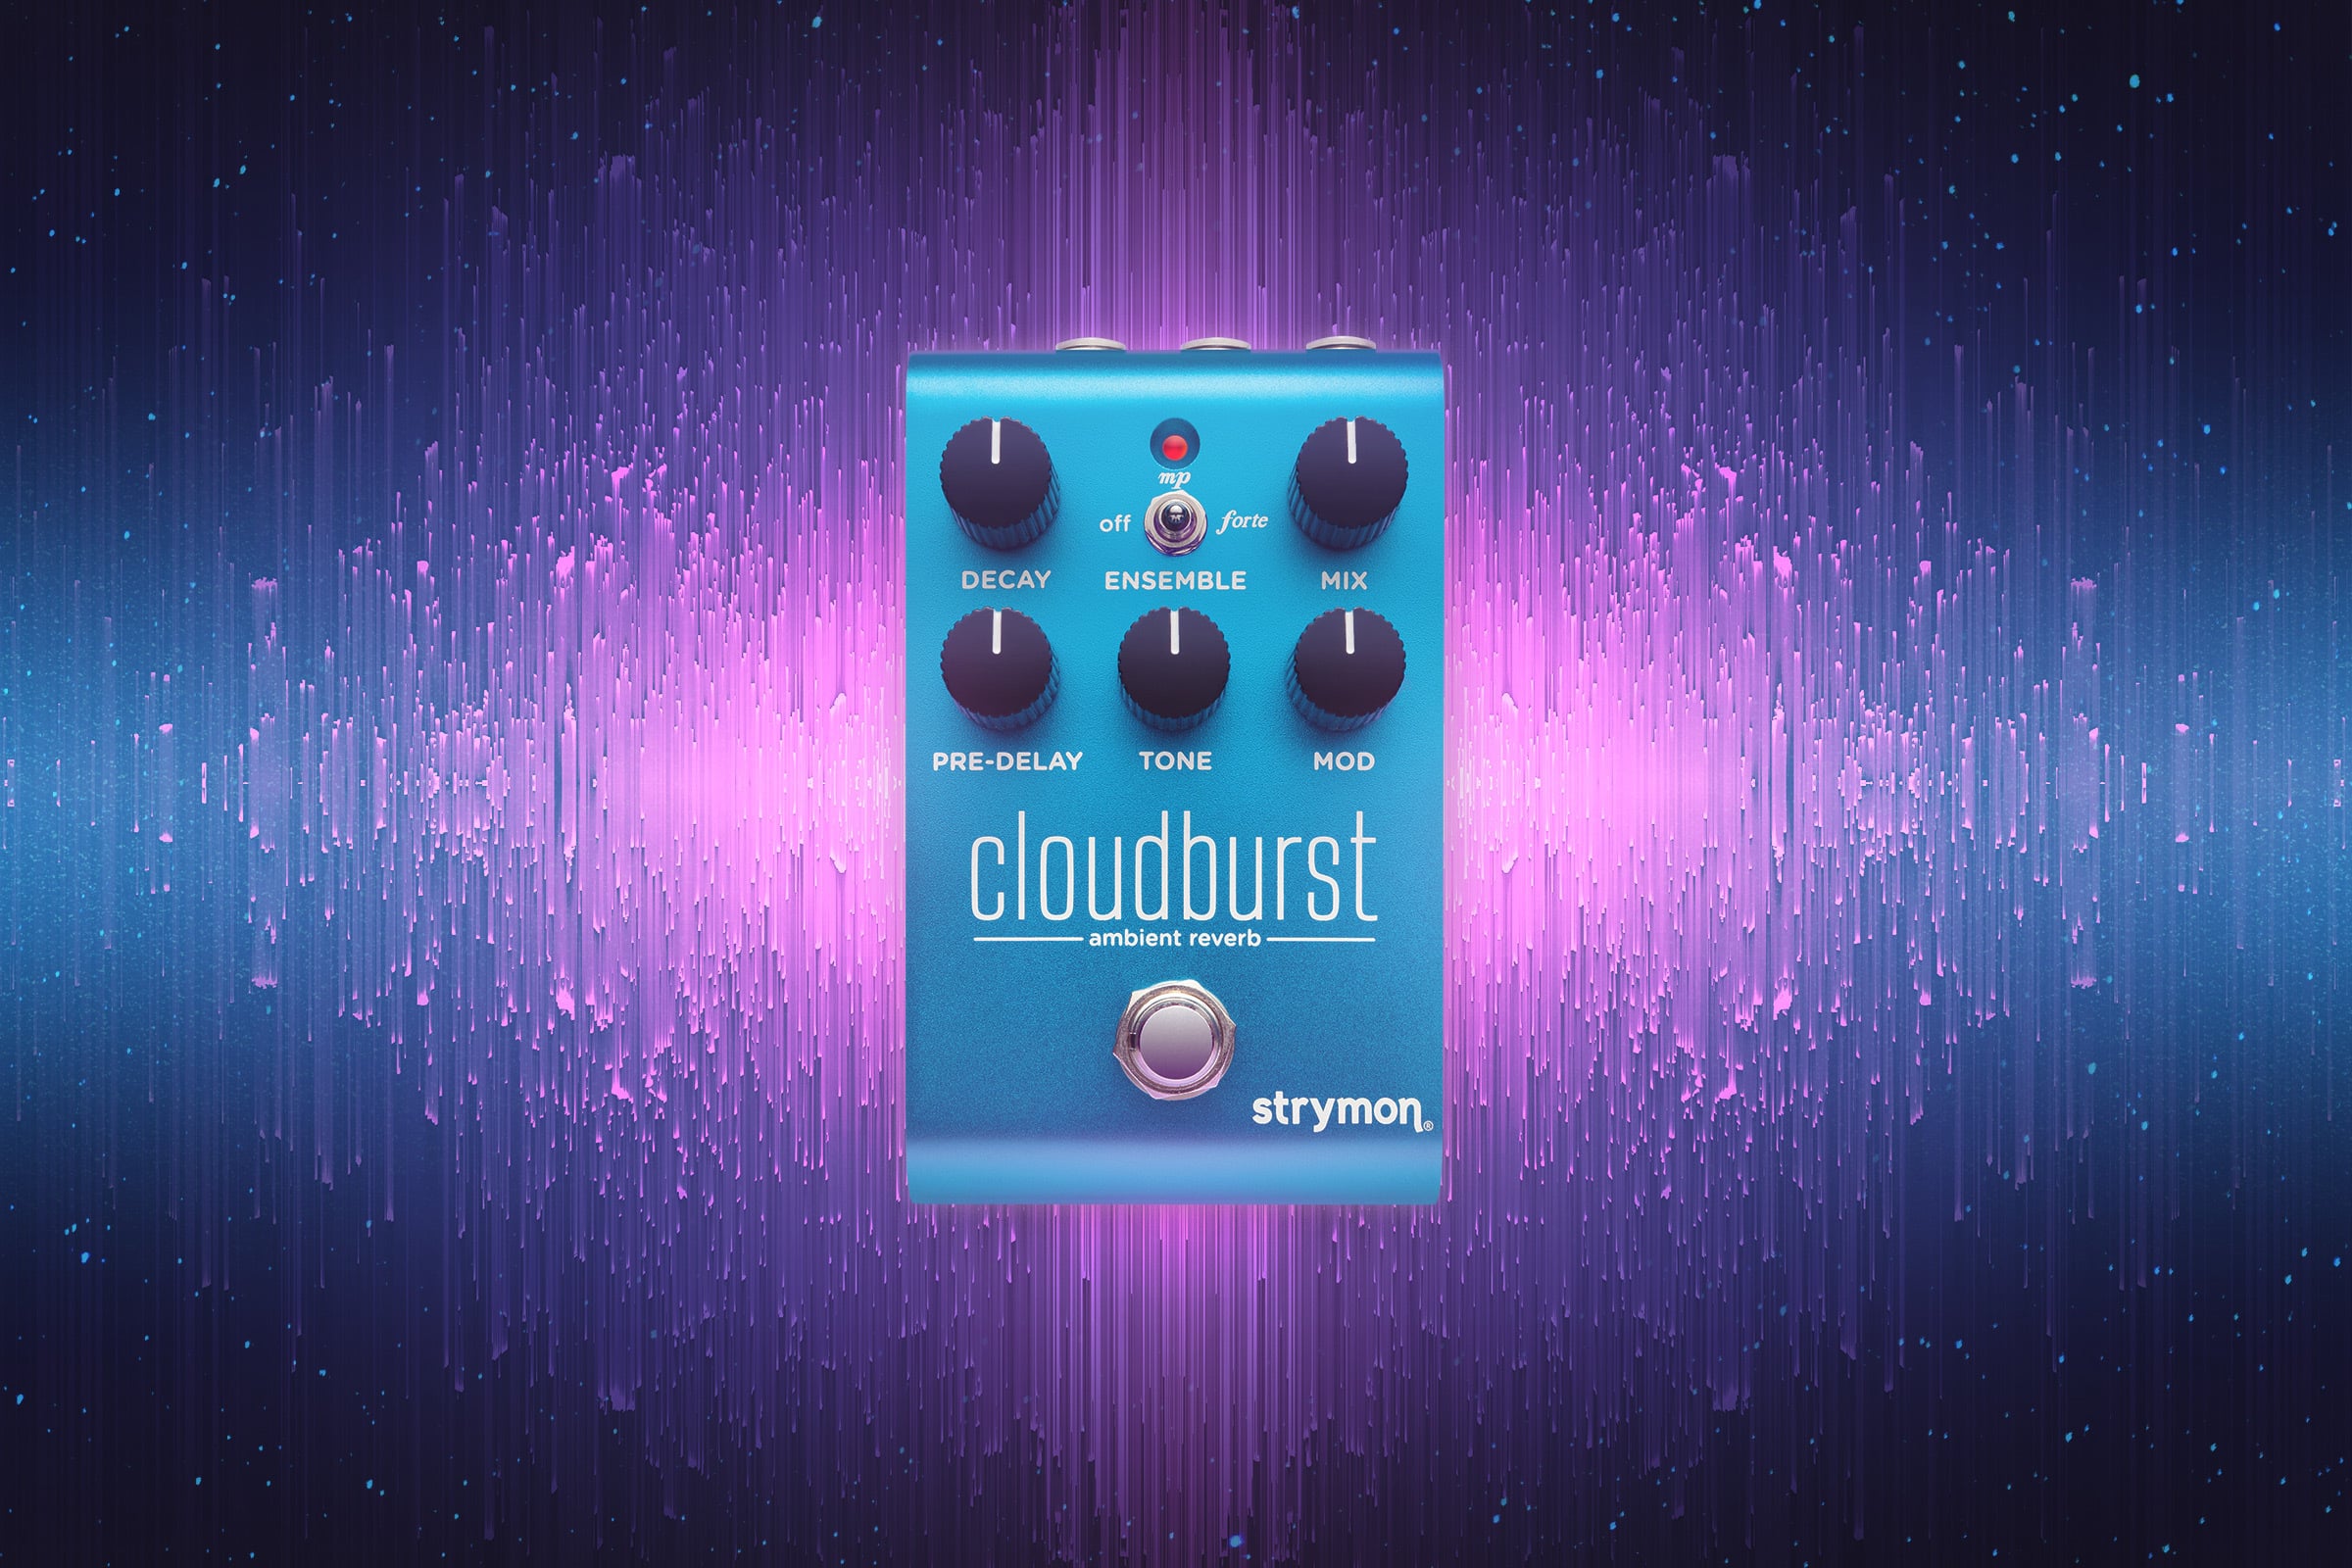 Strymon Cloudburst Ambient Reverb Sound Samples and Deep Dive